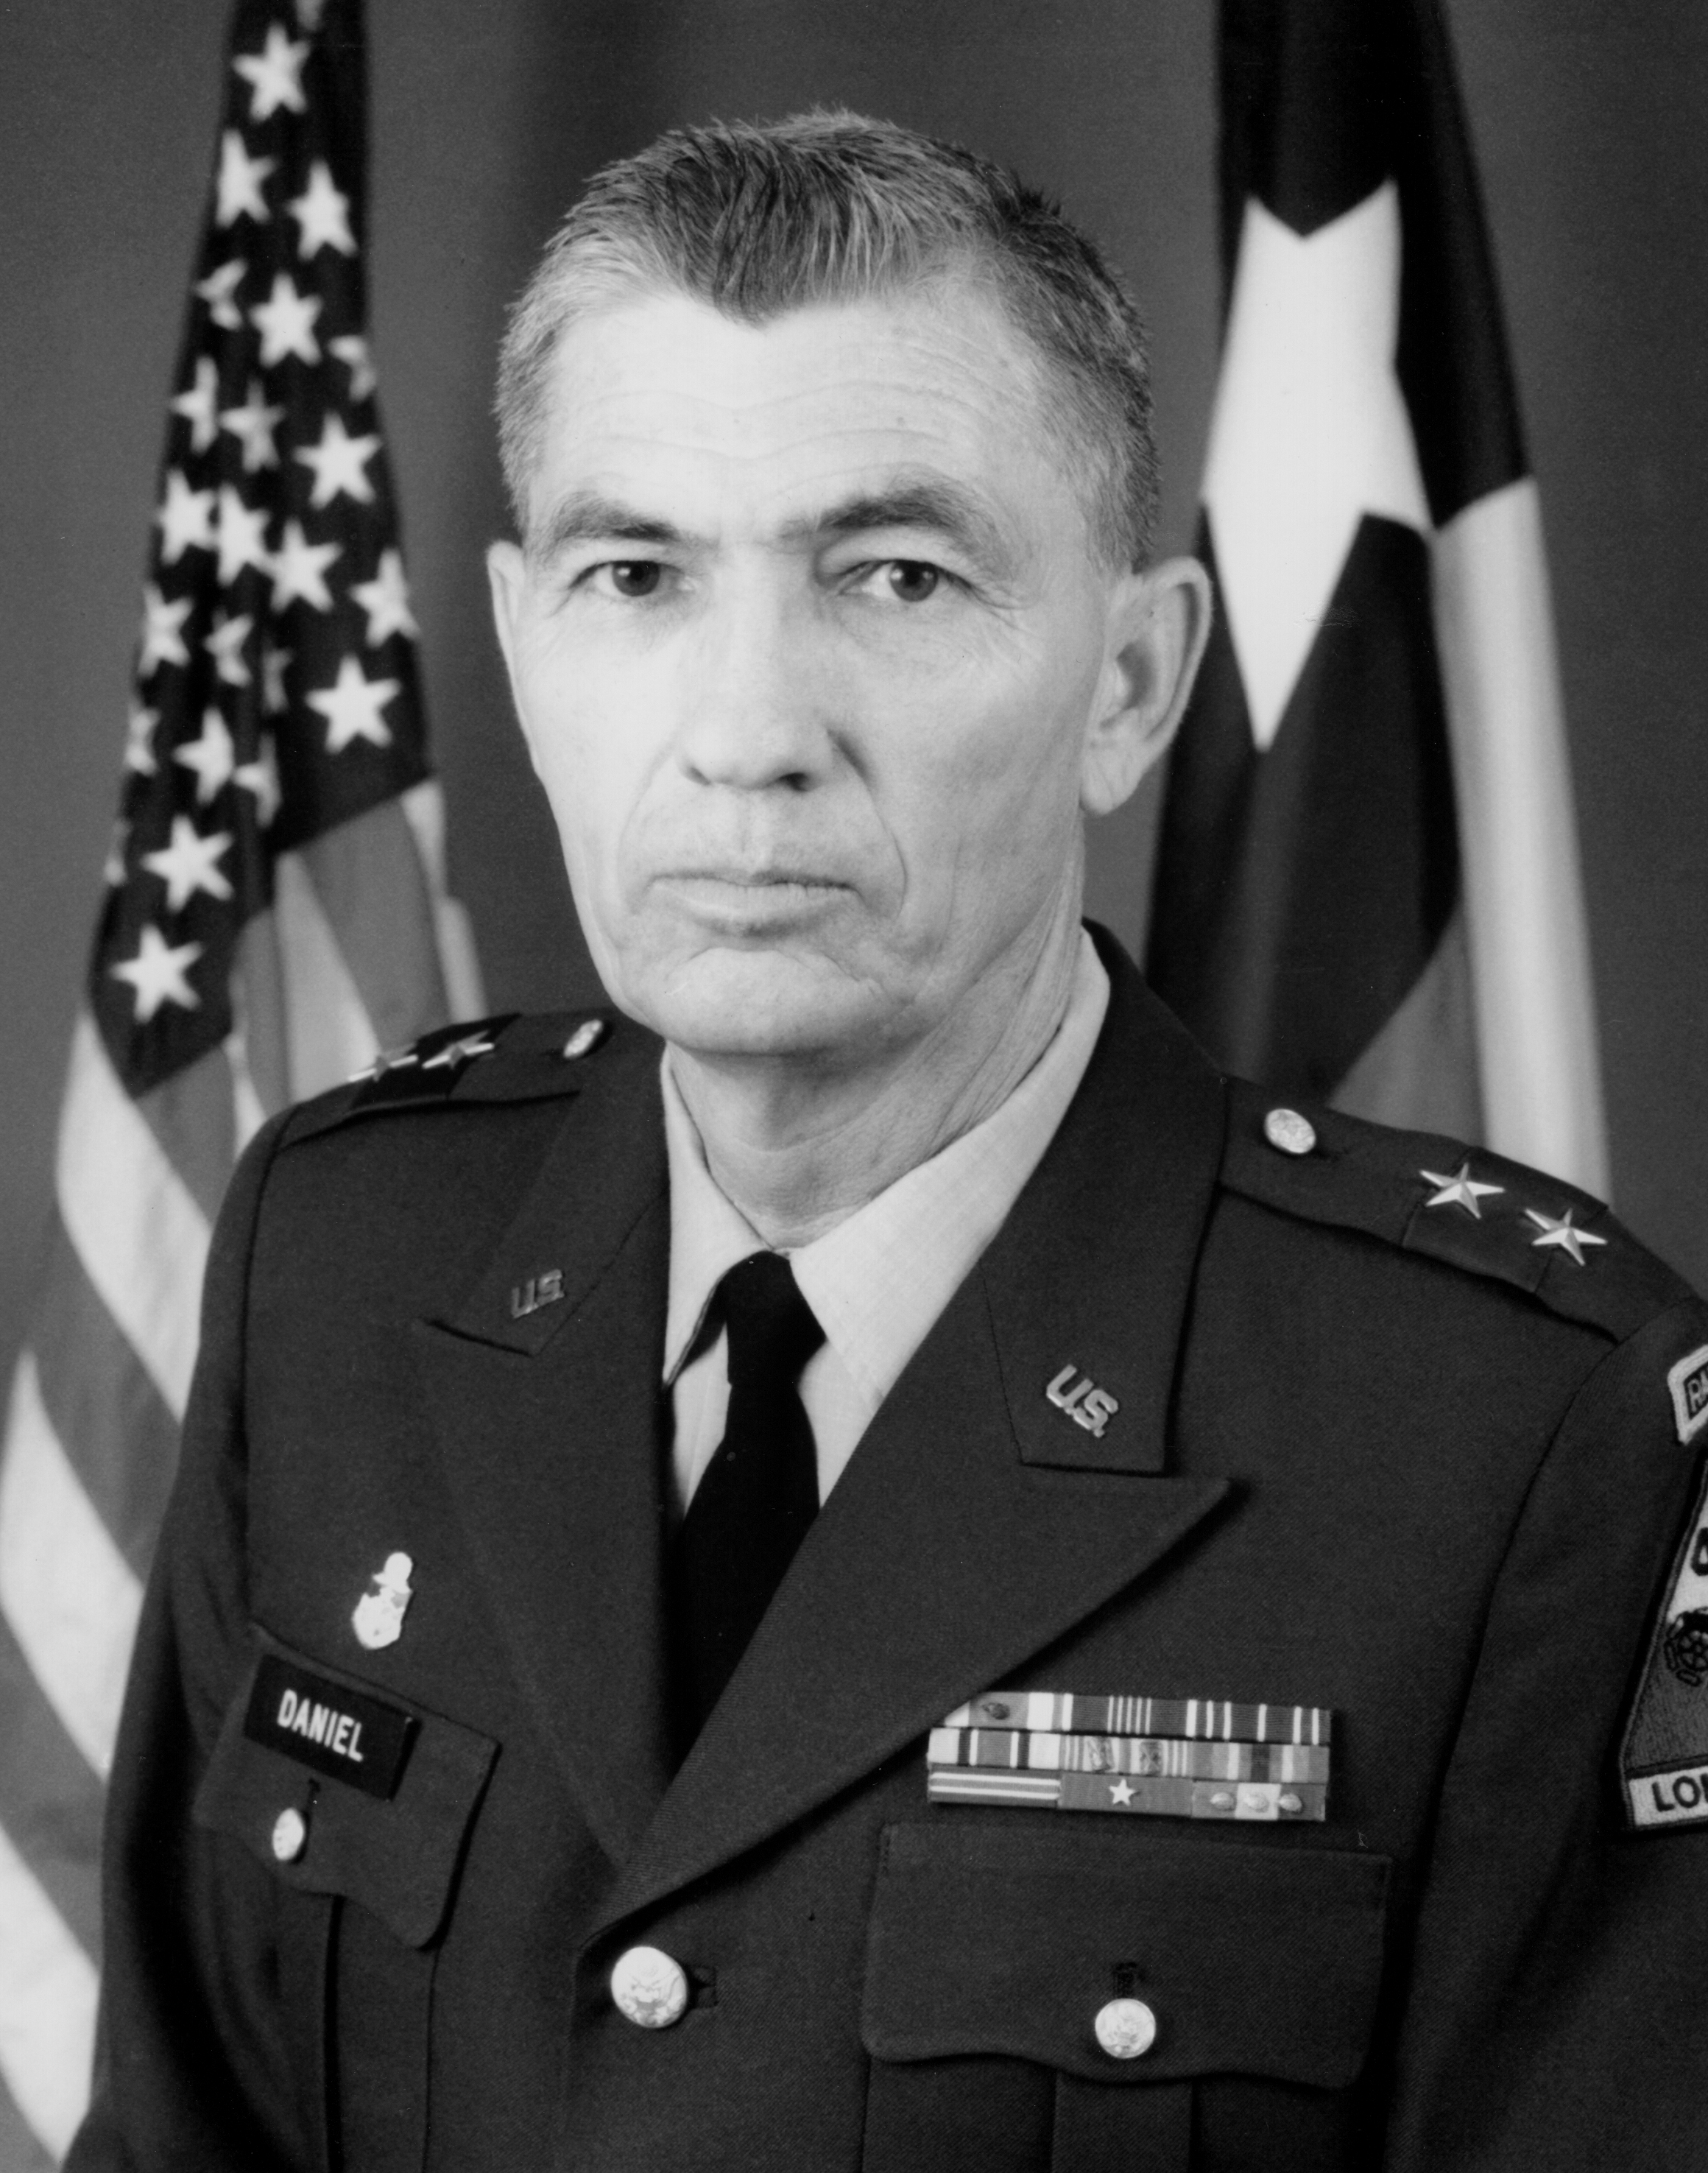 Lieutenant General Don O. Daniel